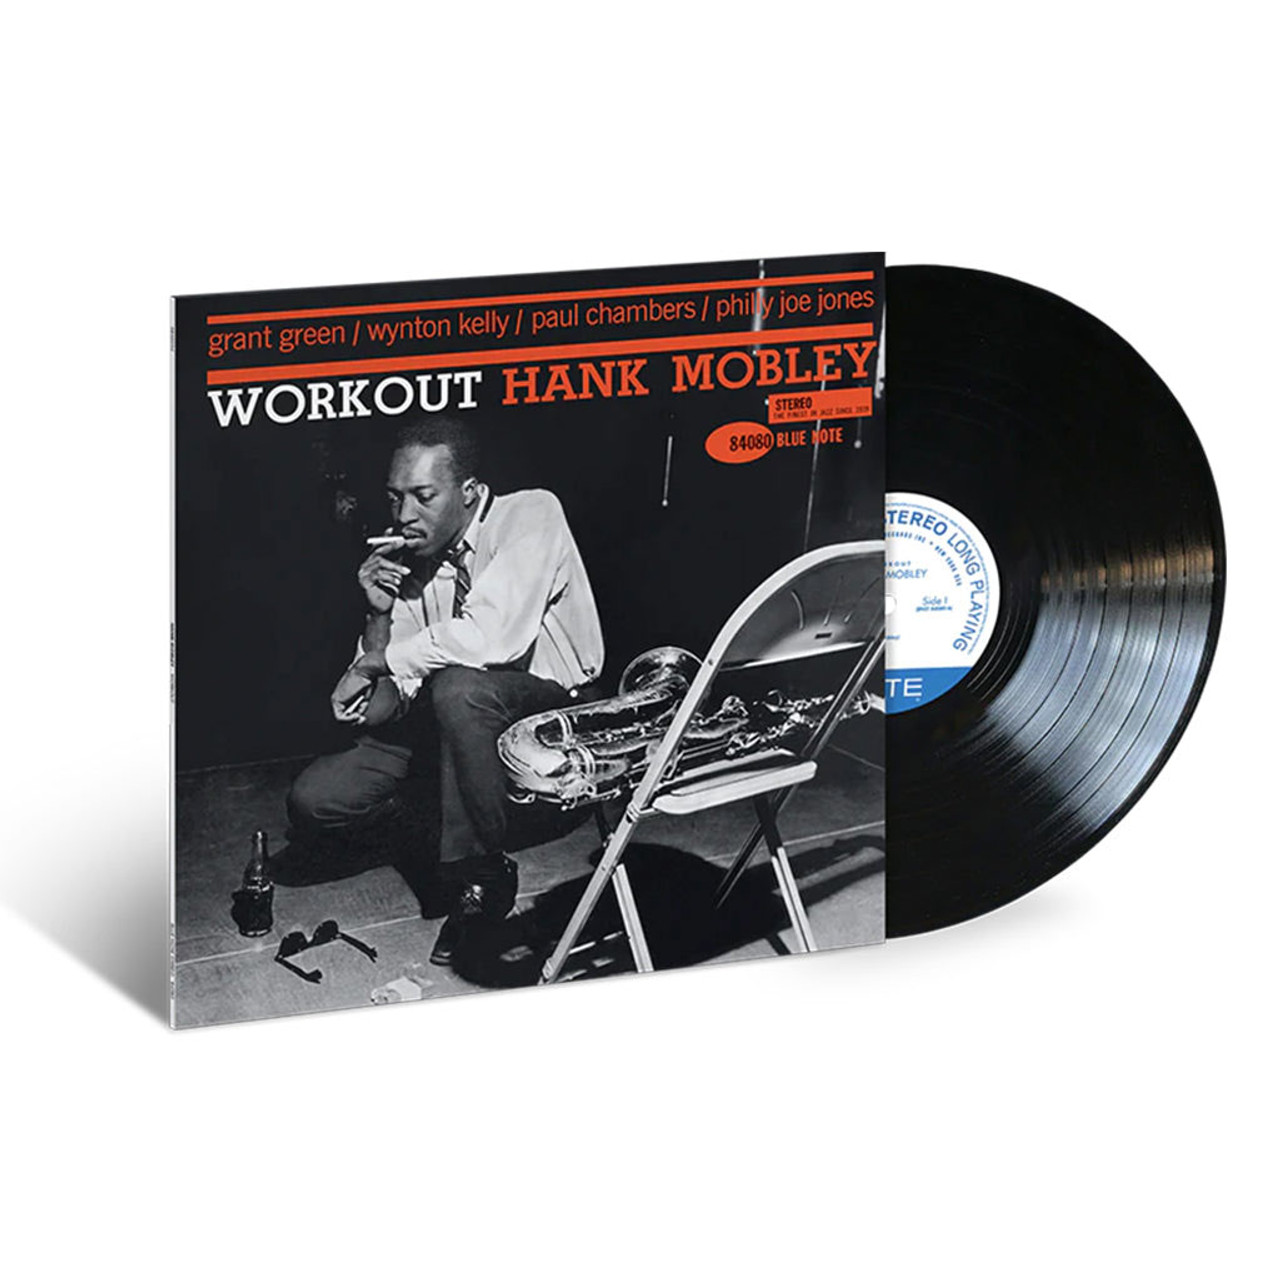 CD Shop - HANK MOBLEY Workout